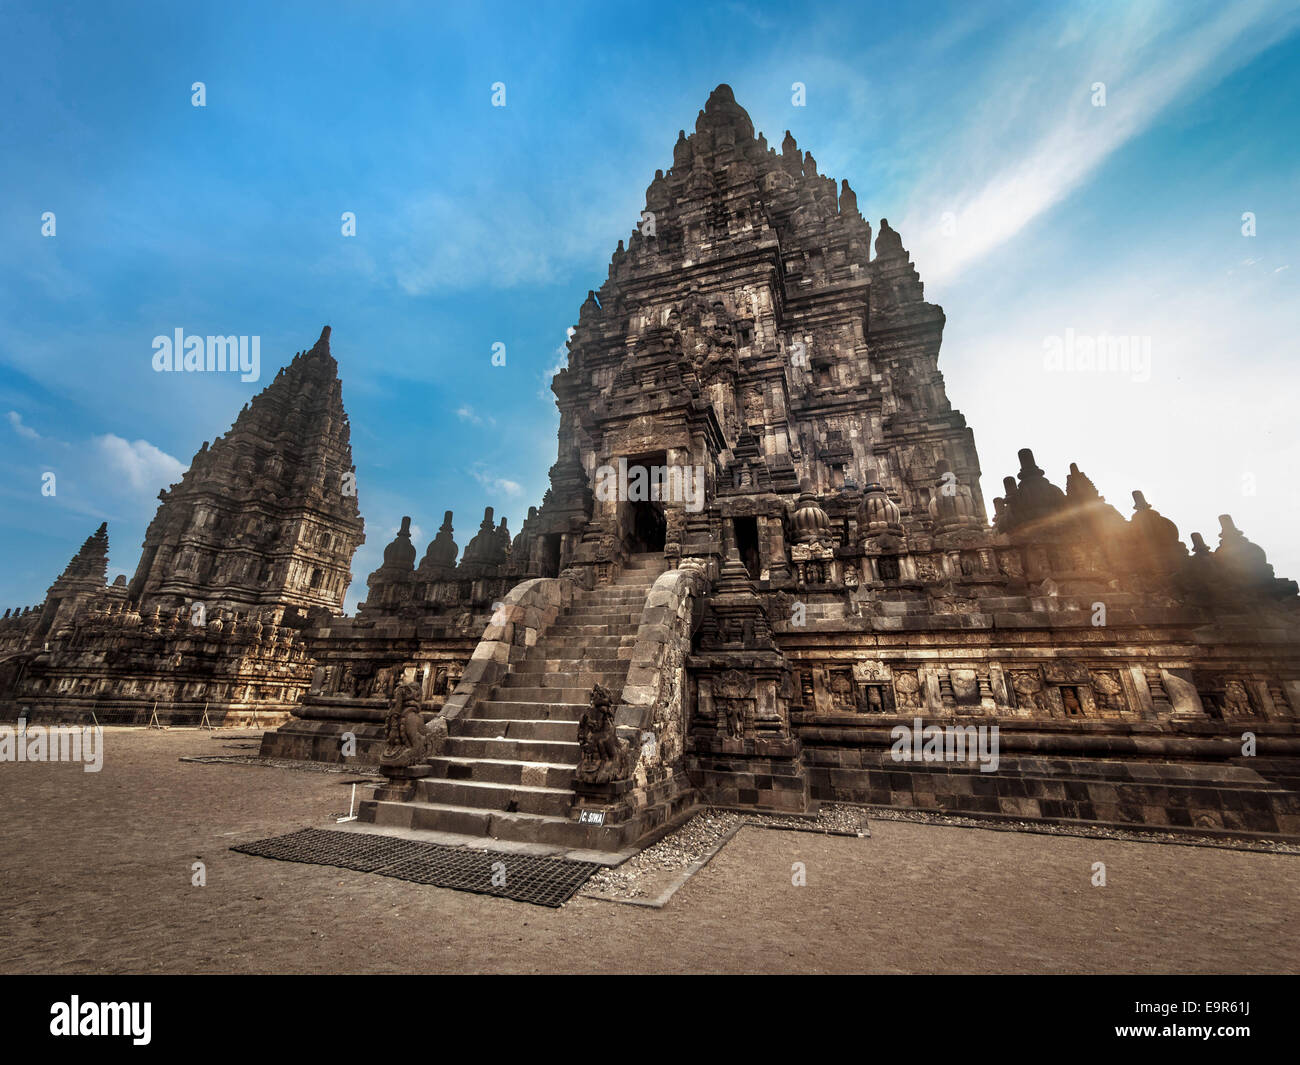 Al atardecer del templo de Prambanan, Java Central, Indonesia. Foto de stock